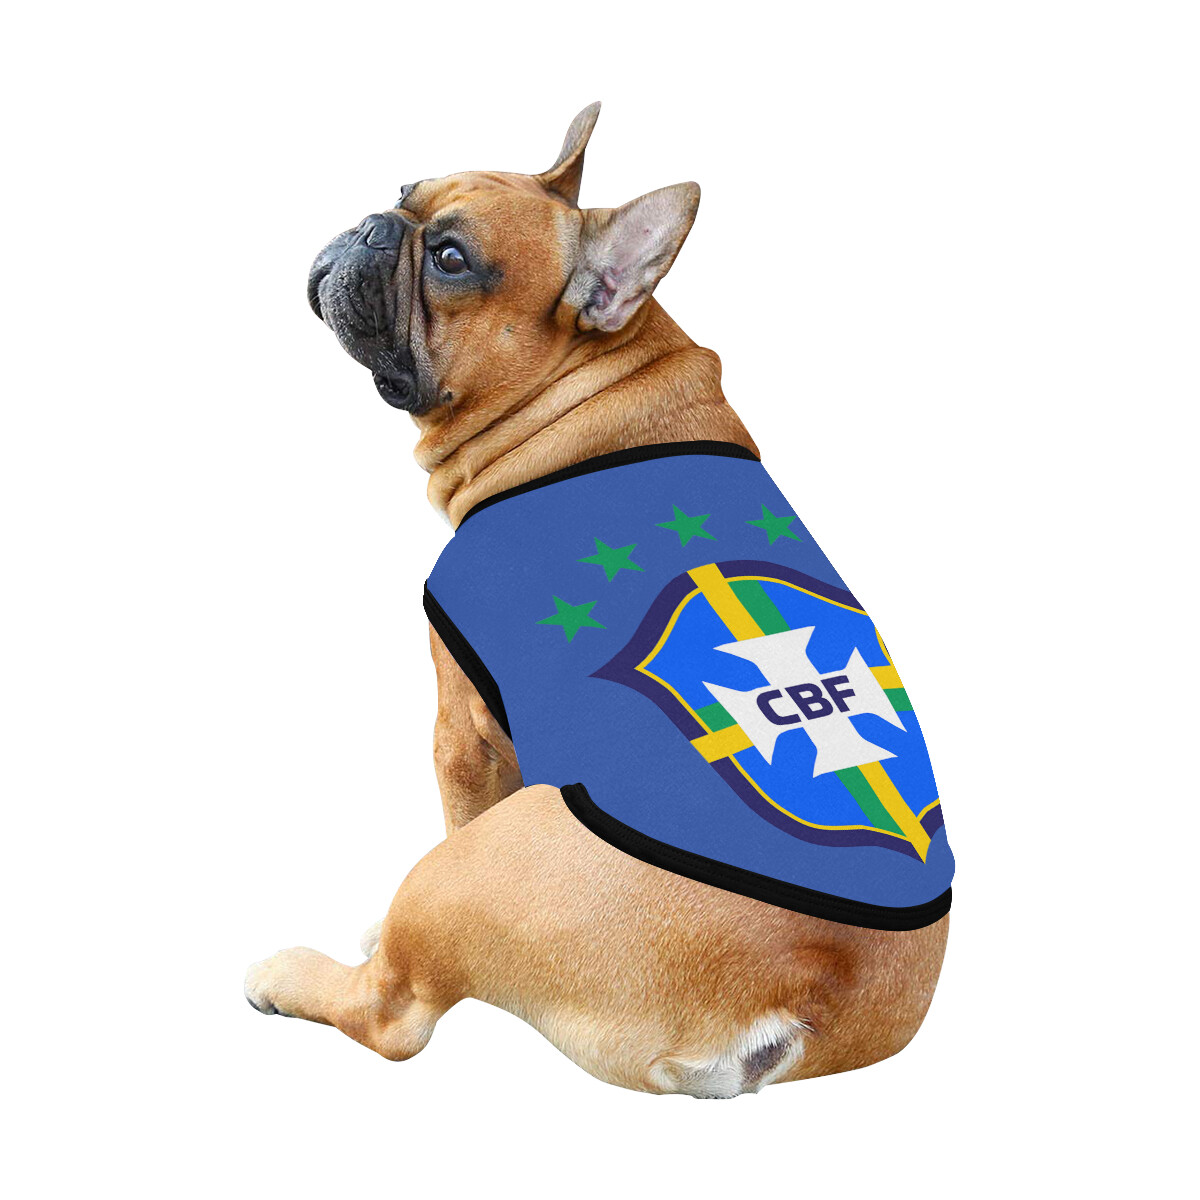 🐕🇧🇷⚽️ Brazil, Soccer Team, Dog t-shirt, Dog Tank Top, Dog shirt, Dog clothes, Dog jersey, Gift, 7 sizes XS to 3XL, Brazilian, I love sports, blue